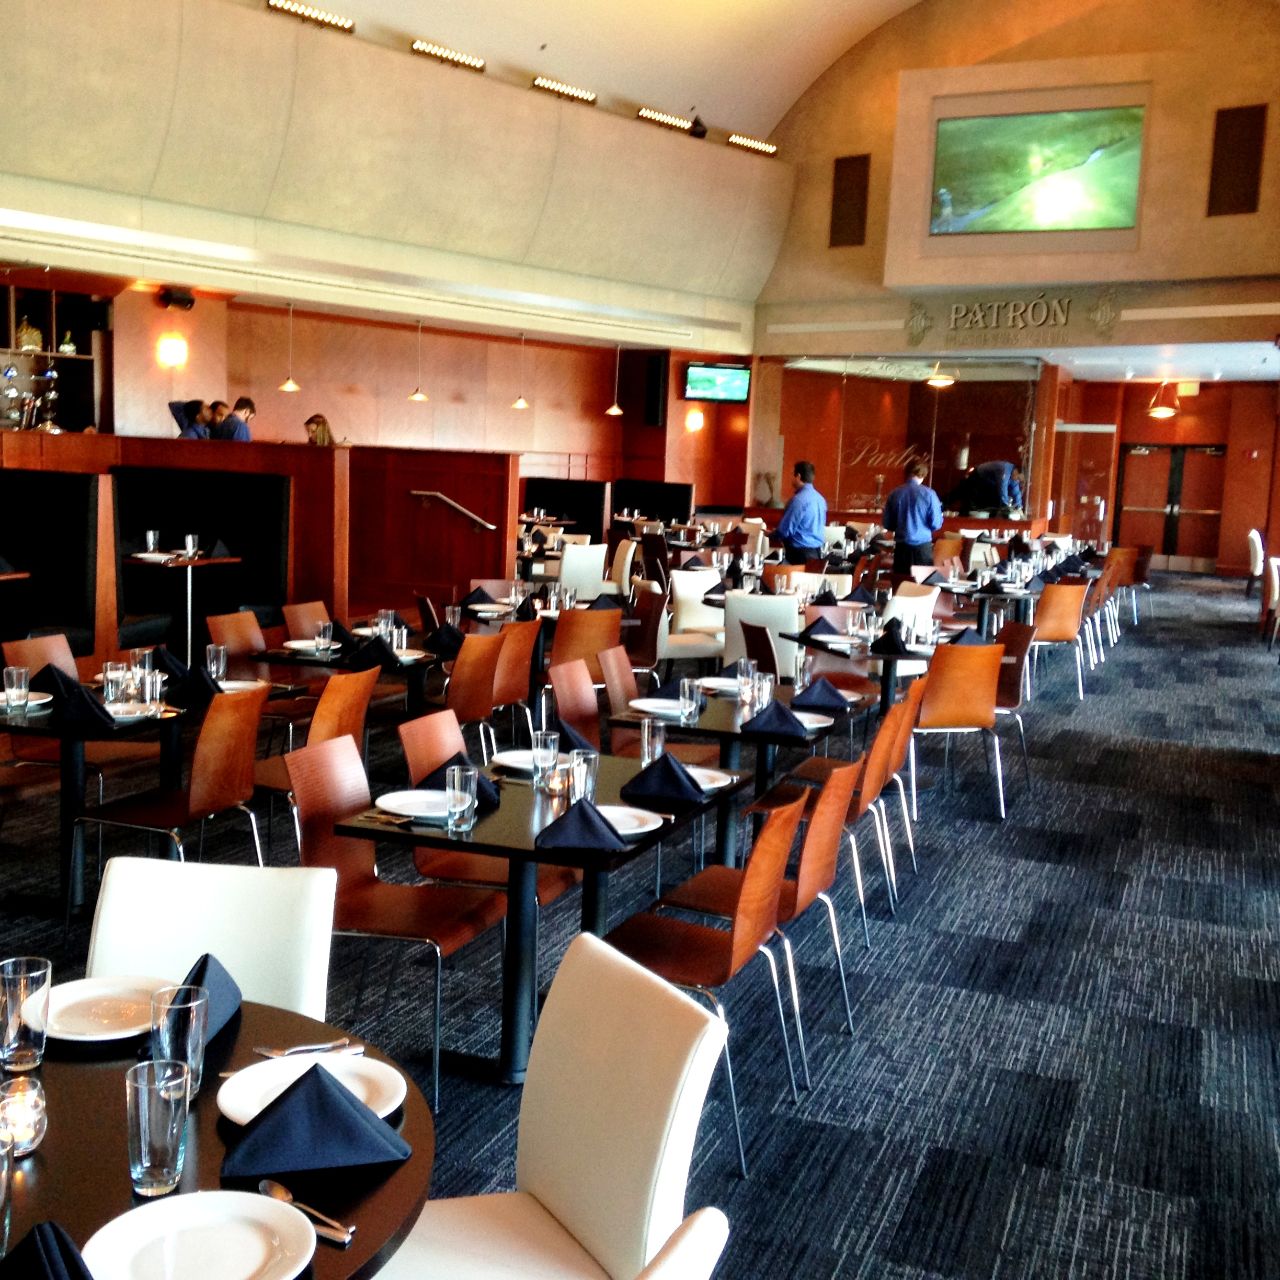 BetMGM Sports Lounge Restaurant - Nashville, TN | OpenTable